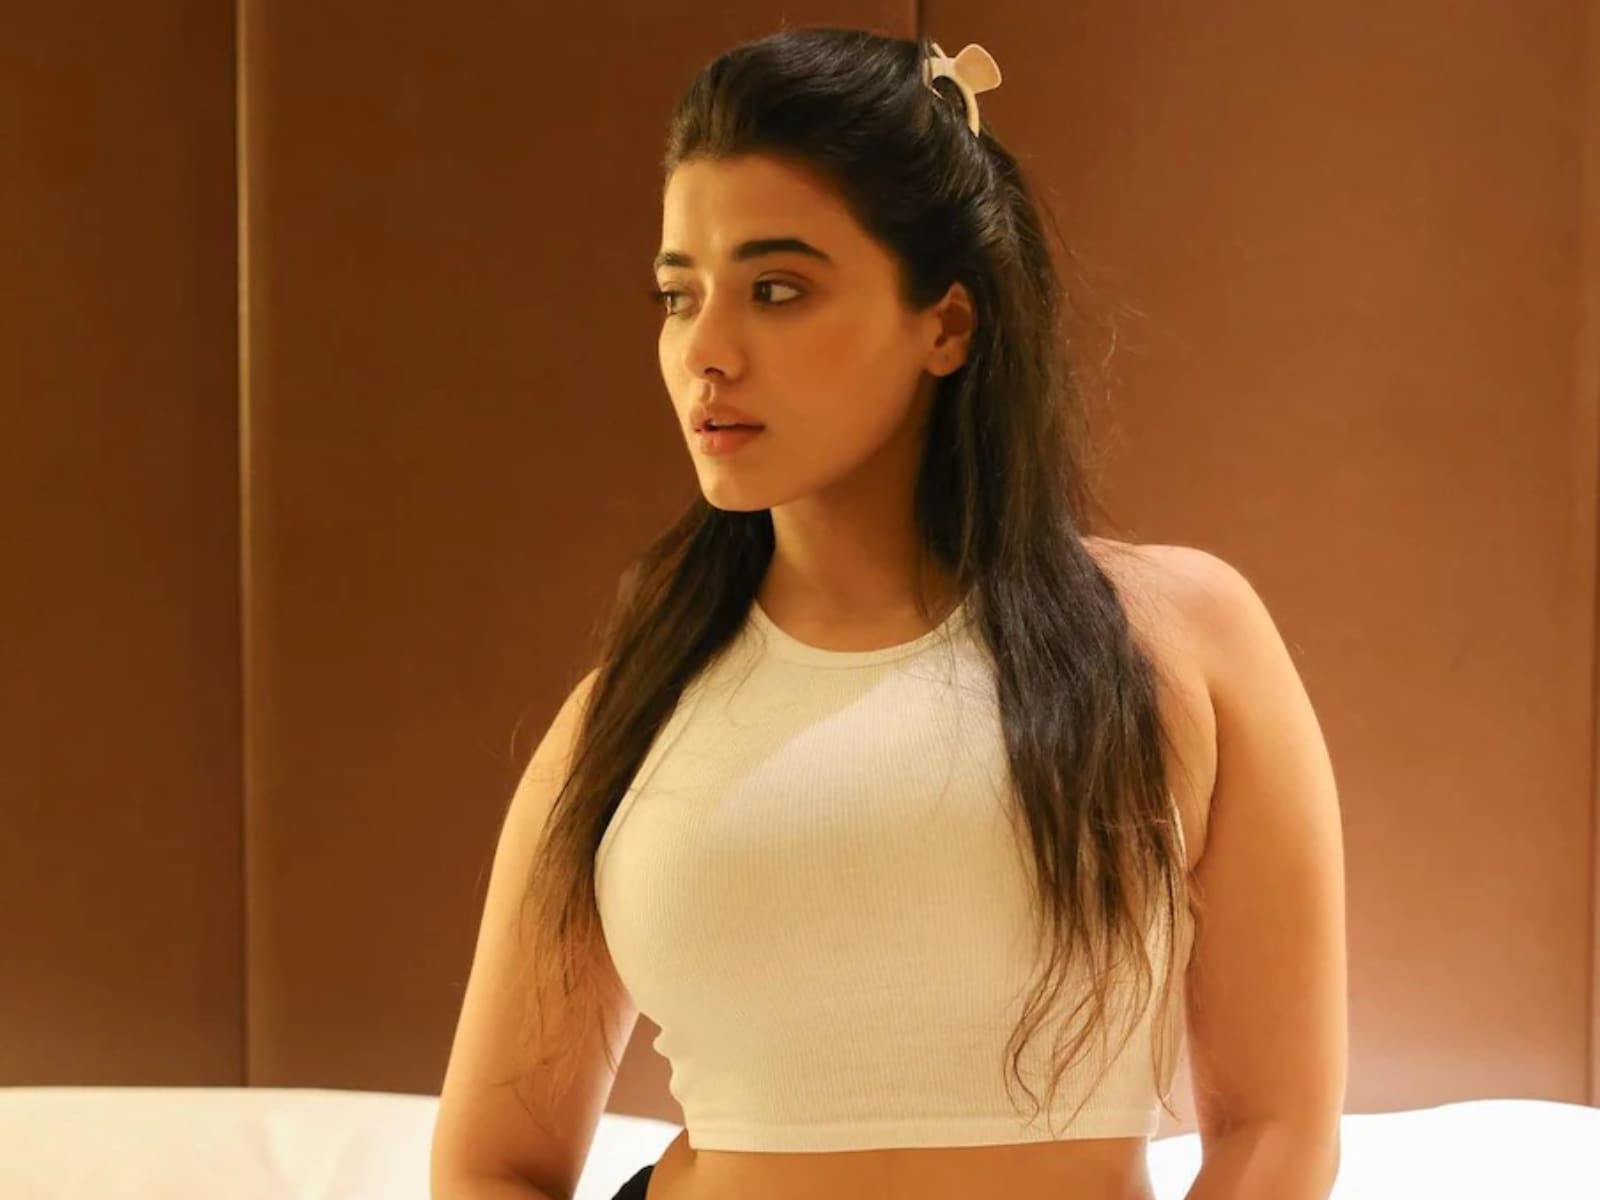 Sri Dhivya Porn Videos - Ketika Sharma Looks Stunning In Tube Top, Fans Can't Stop Dropping Gire  Emojis - News18